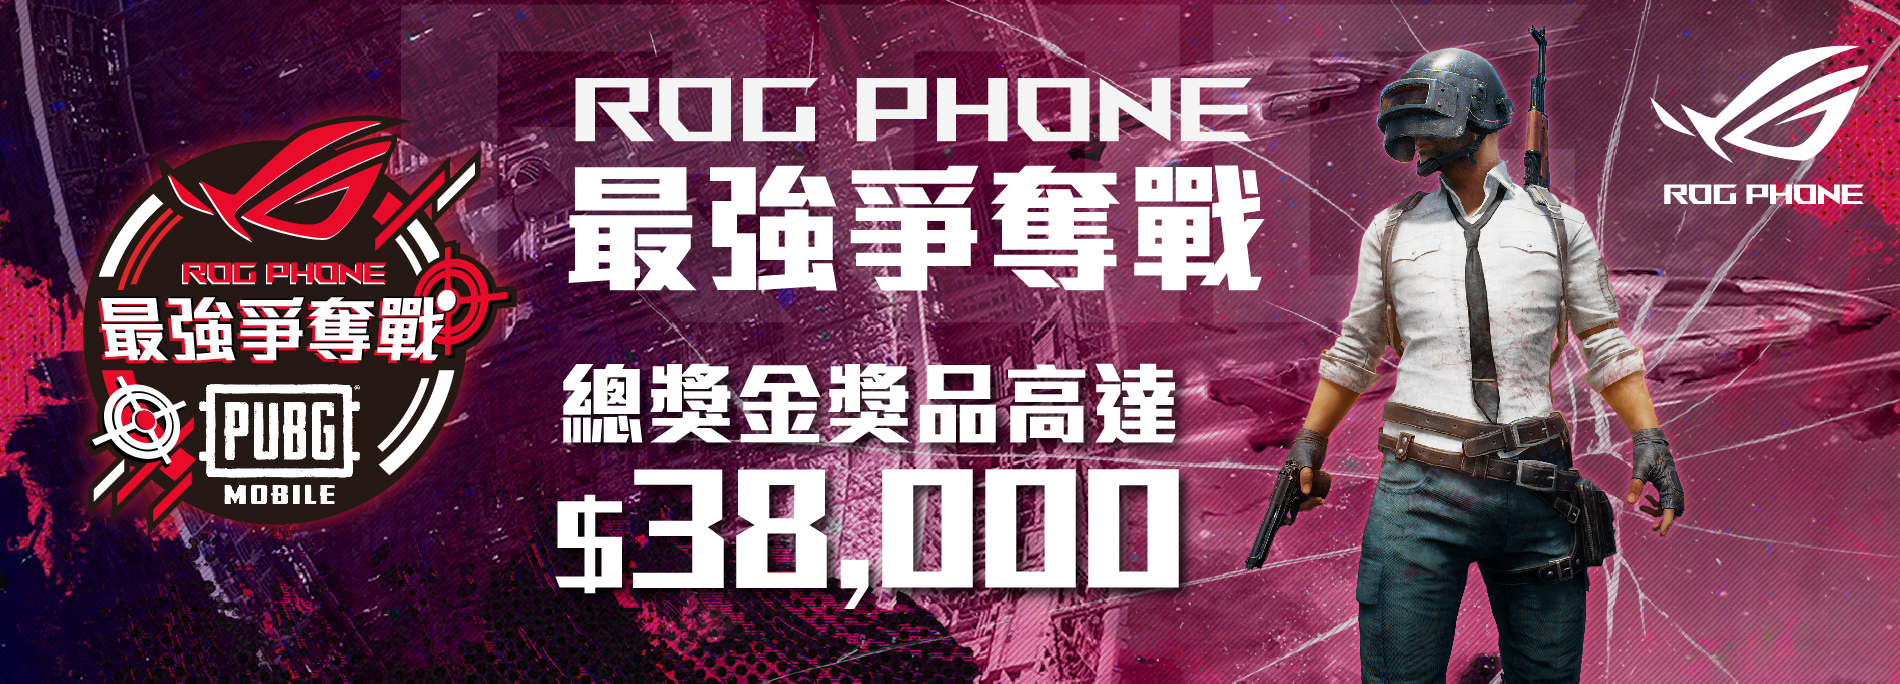 ROG Phone x PUBG Mobile 最強爭奪戰 (預選賽)